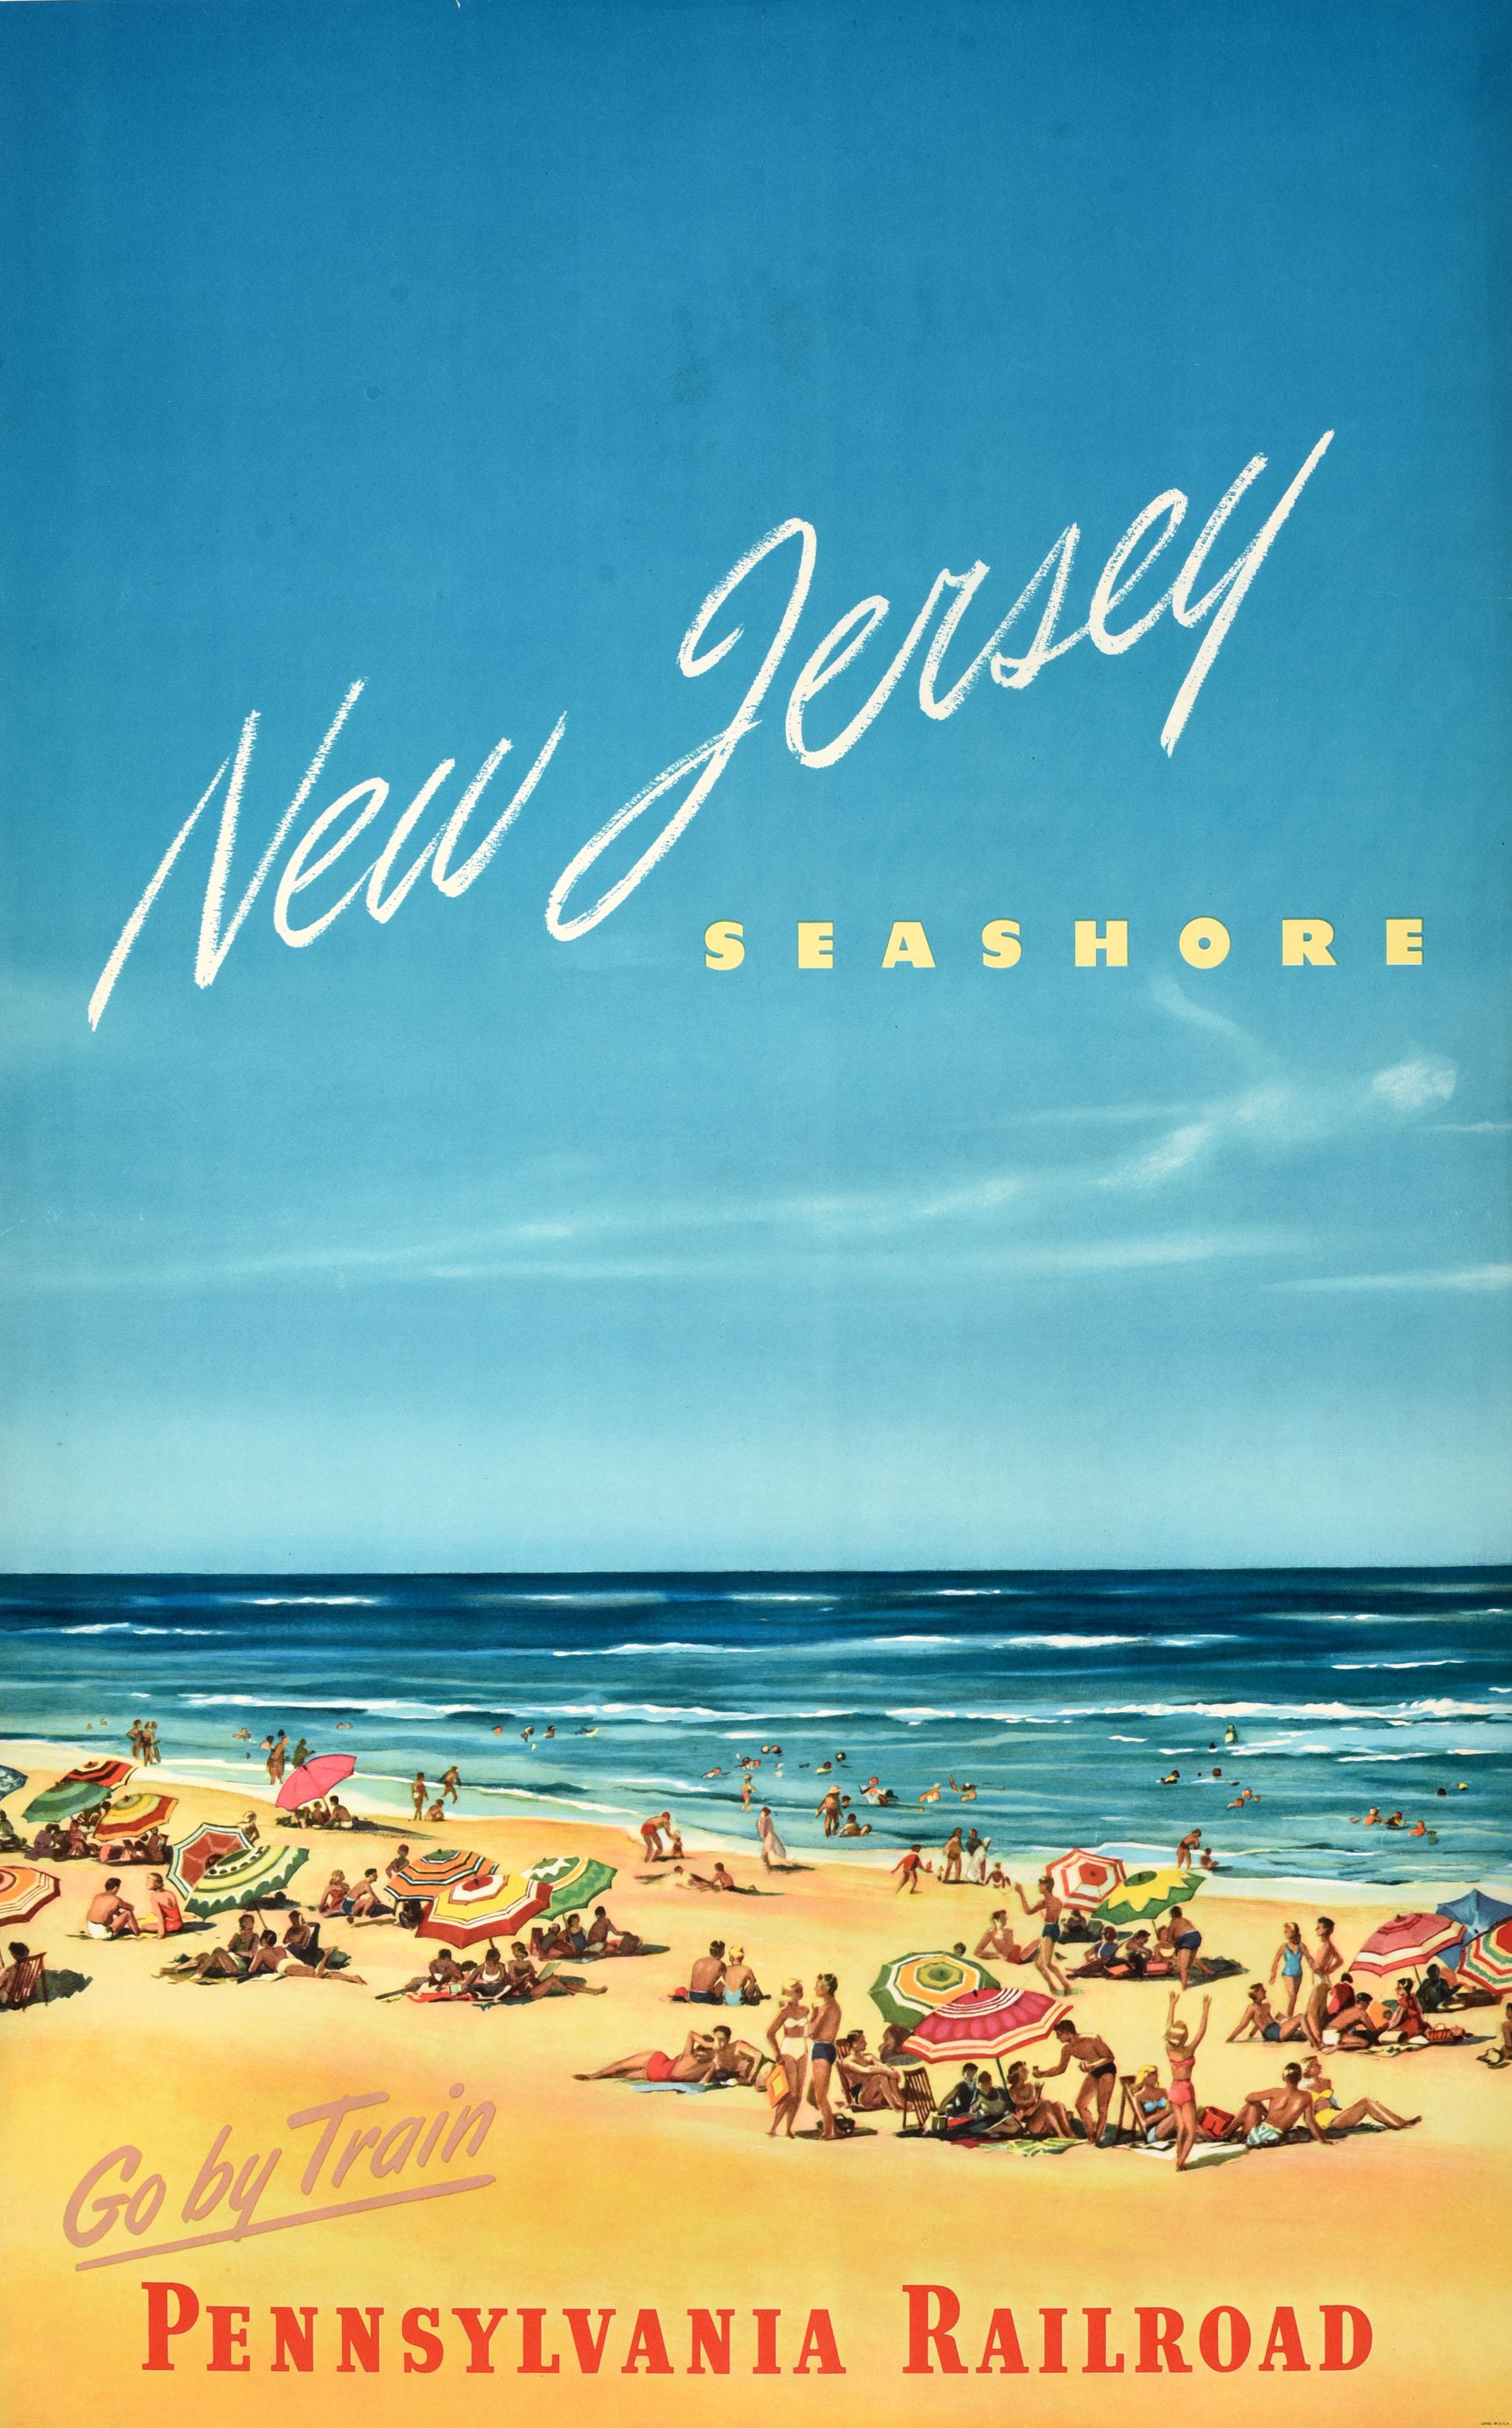 Unknown Print - Original Vintage Travel Poster New Jersey Seashore Pennsylvania Railroad Beach